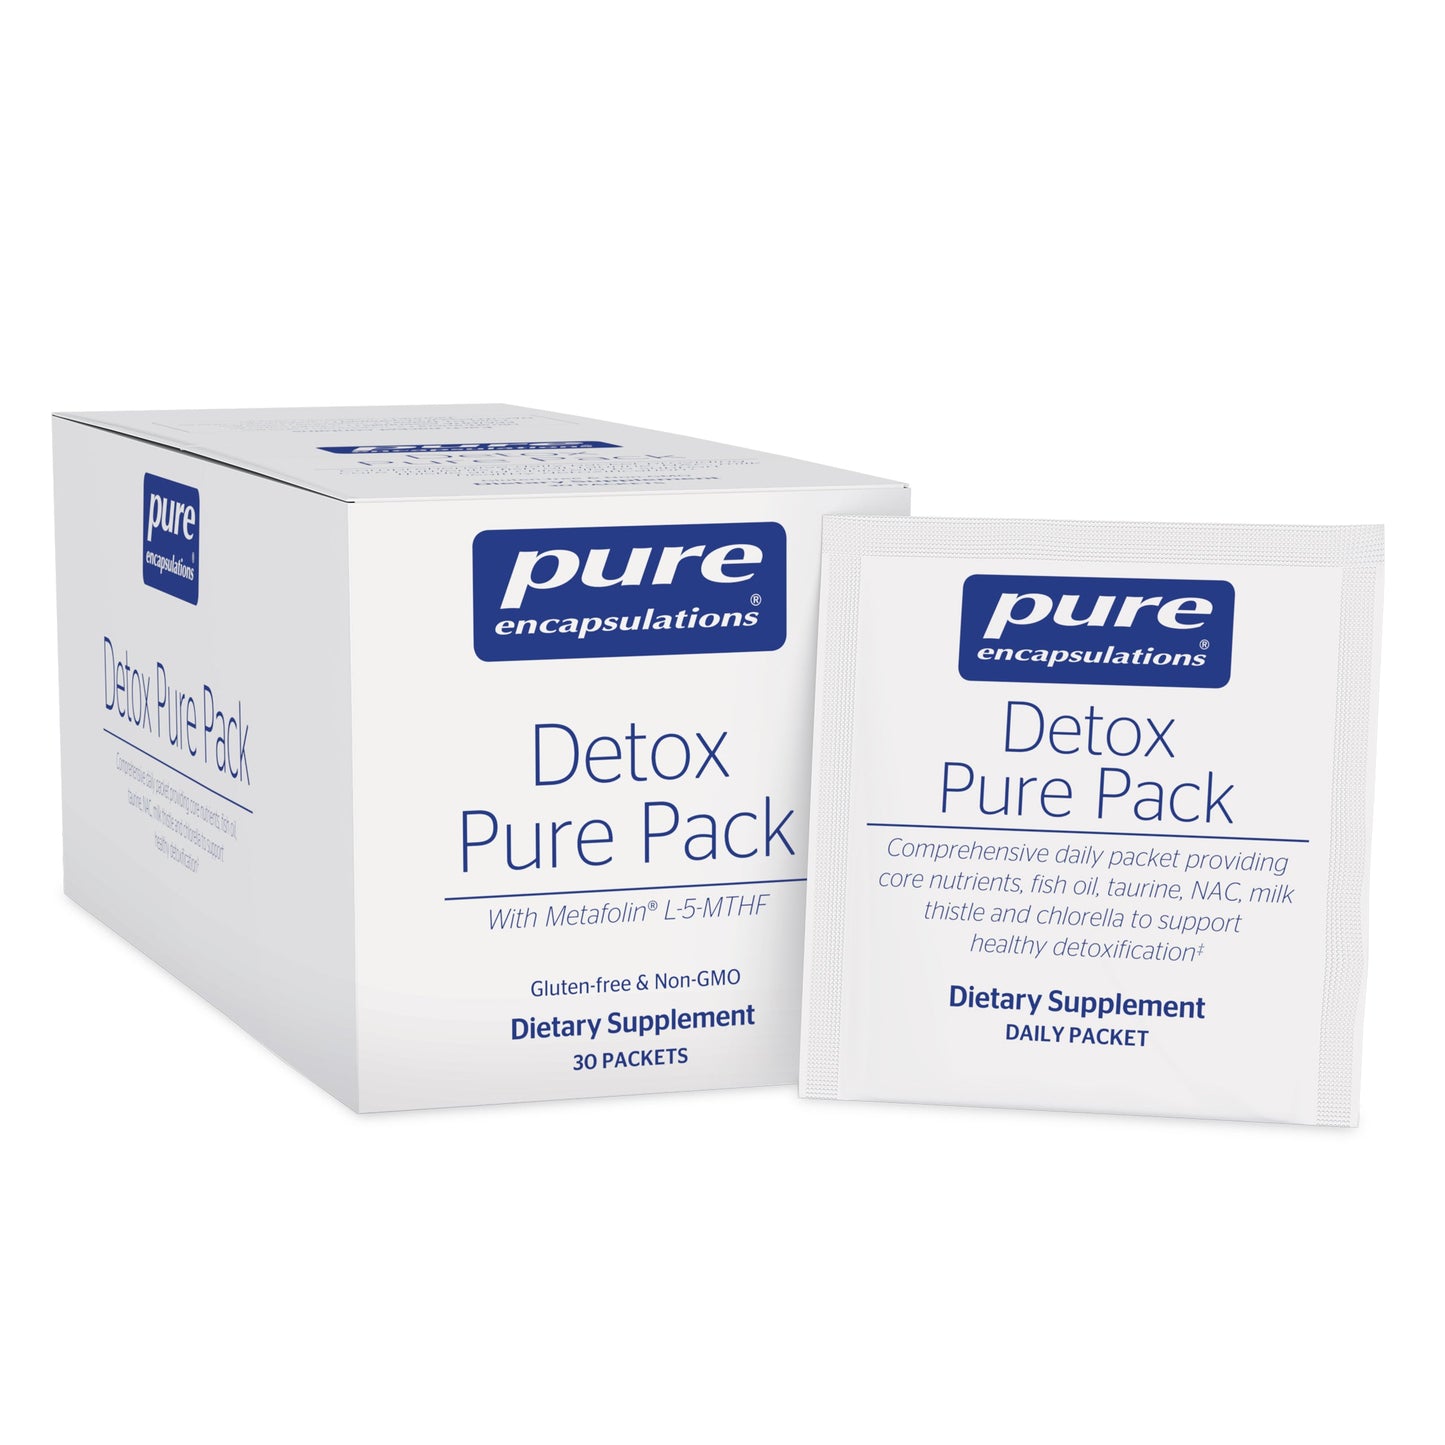 Detox Pure Pack - Pure Encapsulations